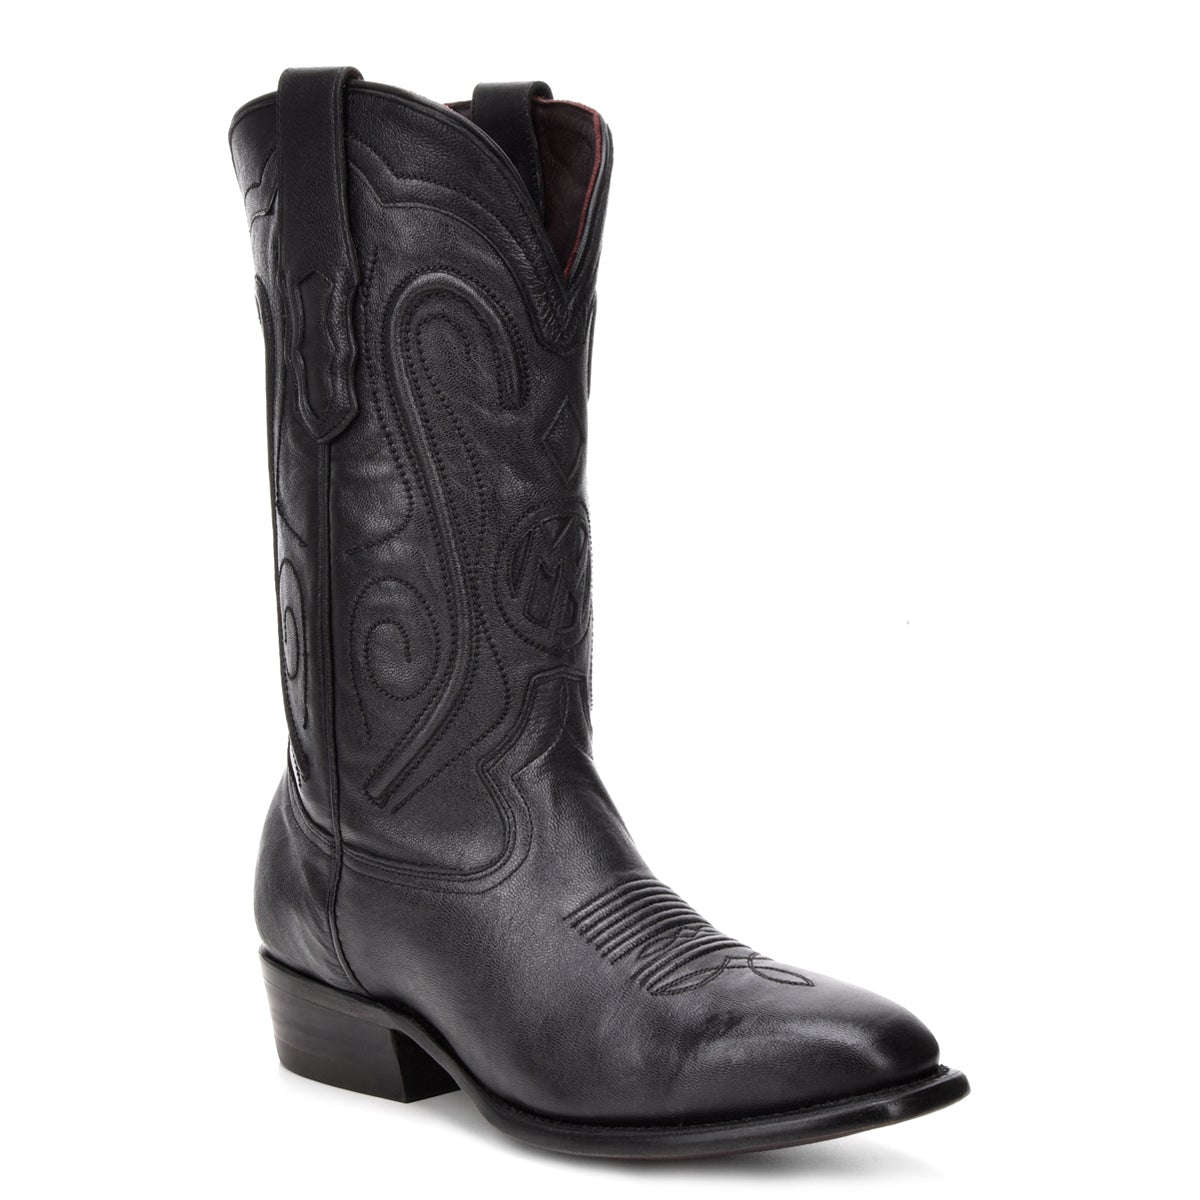 M2136 - Bota de vestir vaqueras Cuadra para hombre en pie – Kuet.us - Cuadra Boots - Western Cowboy, Casual Fashion and Dress Boots